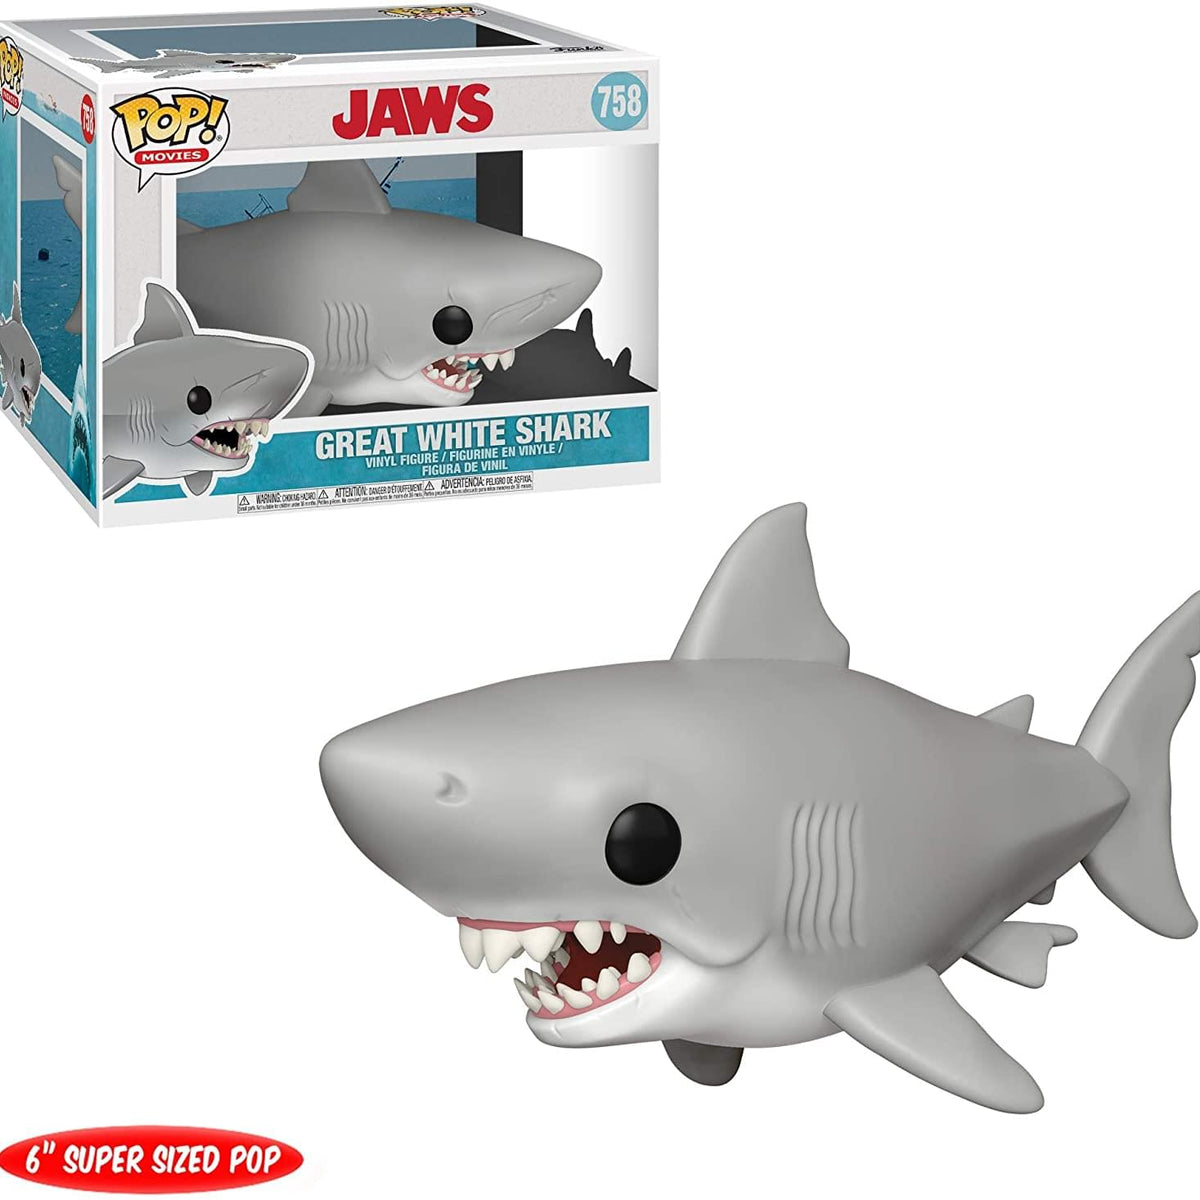 JAWS Funko Pop Vinyl Figure | Great White Shark | Free Shipping